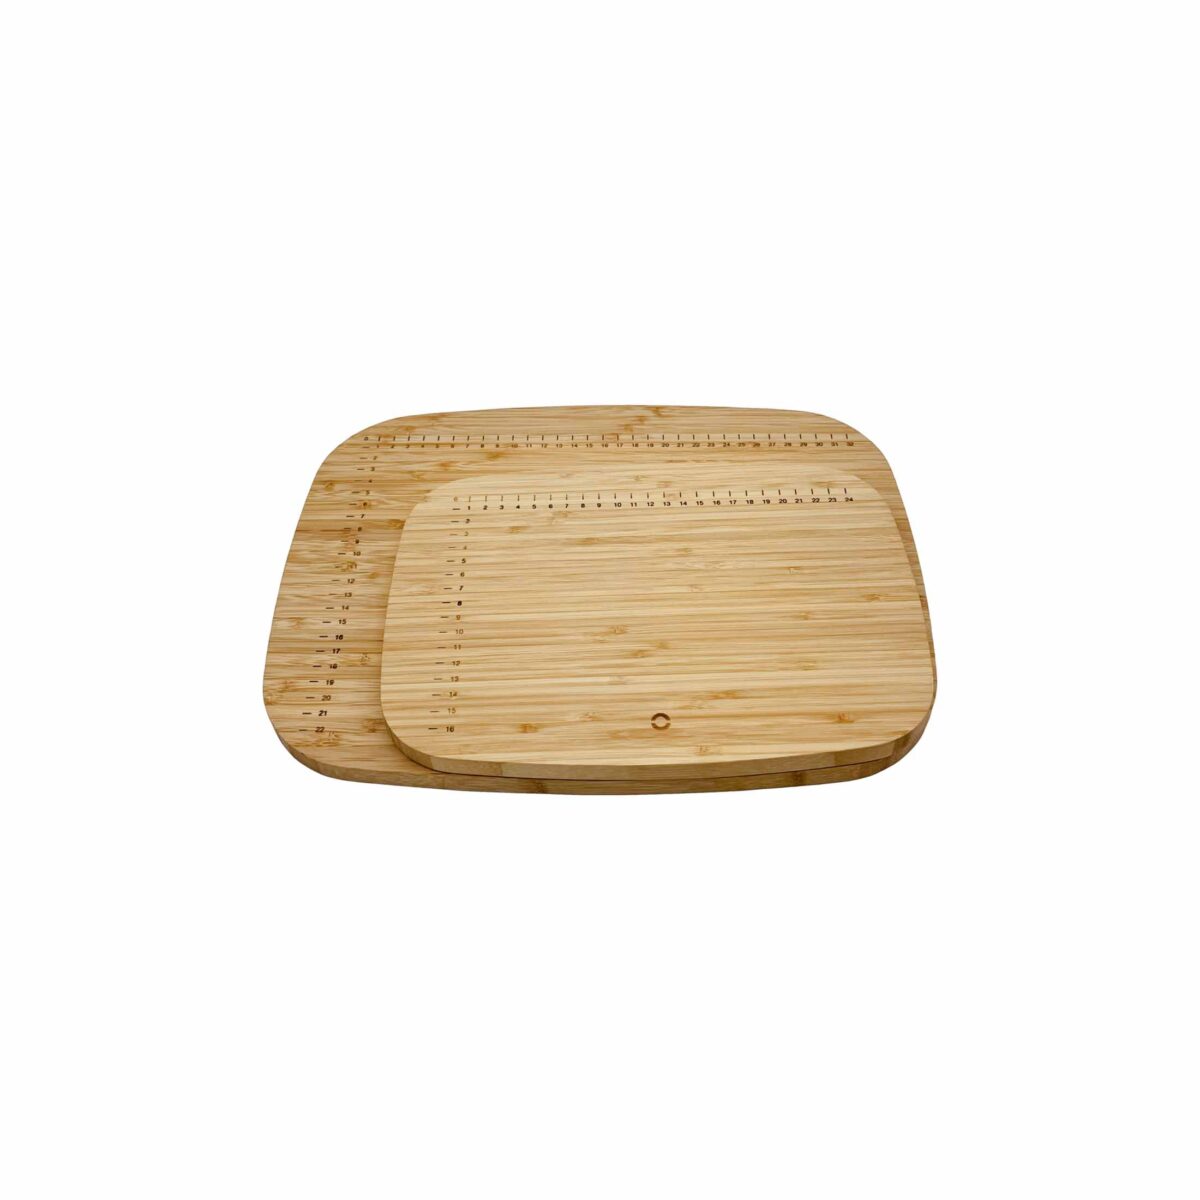 cutting board bamboo madera de cortar bambú cocina sostenible sin tóxicos saludable utensilios kitchen utensils sustainable free of toxics